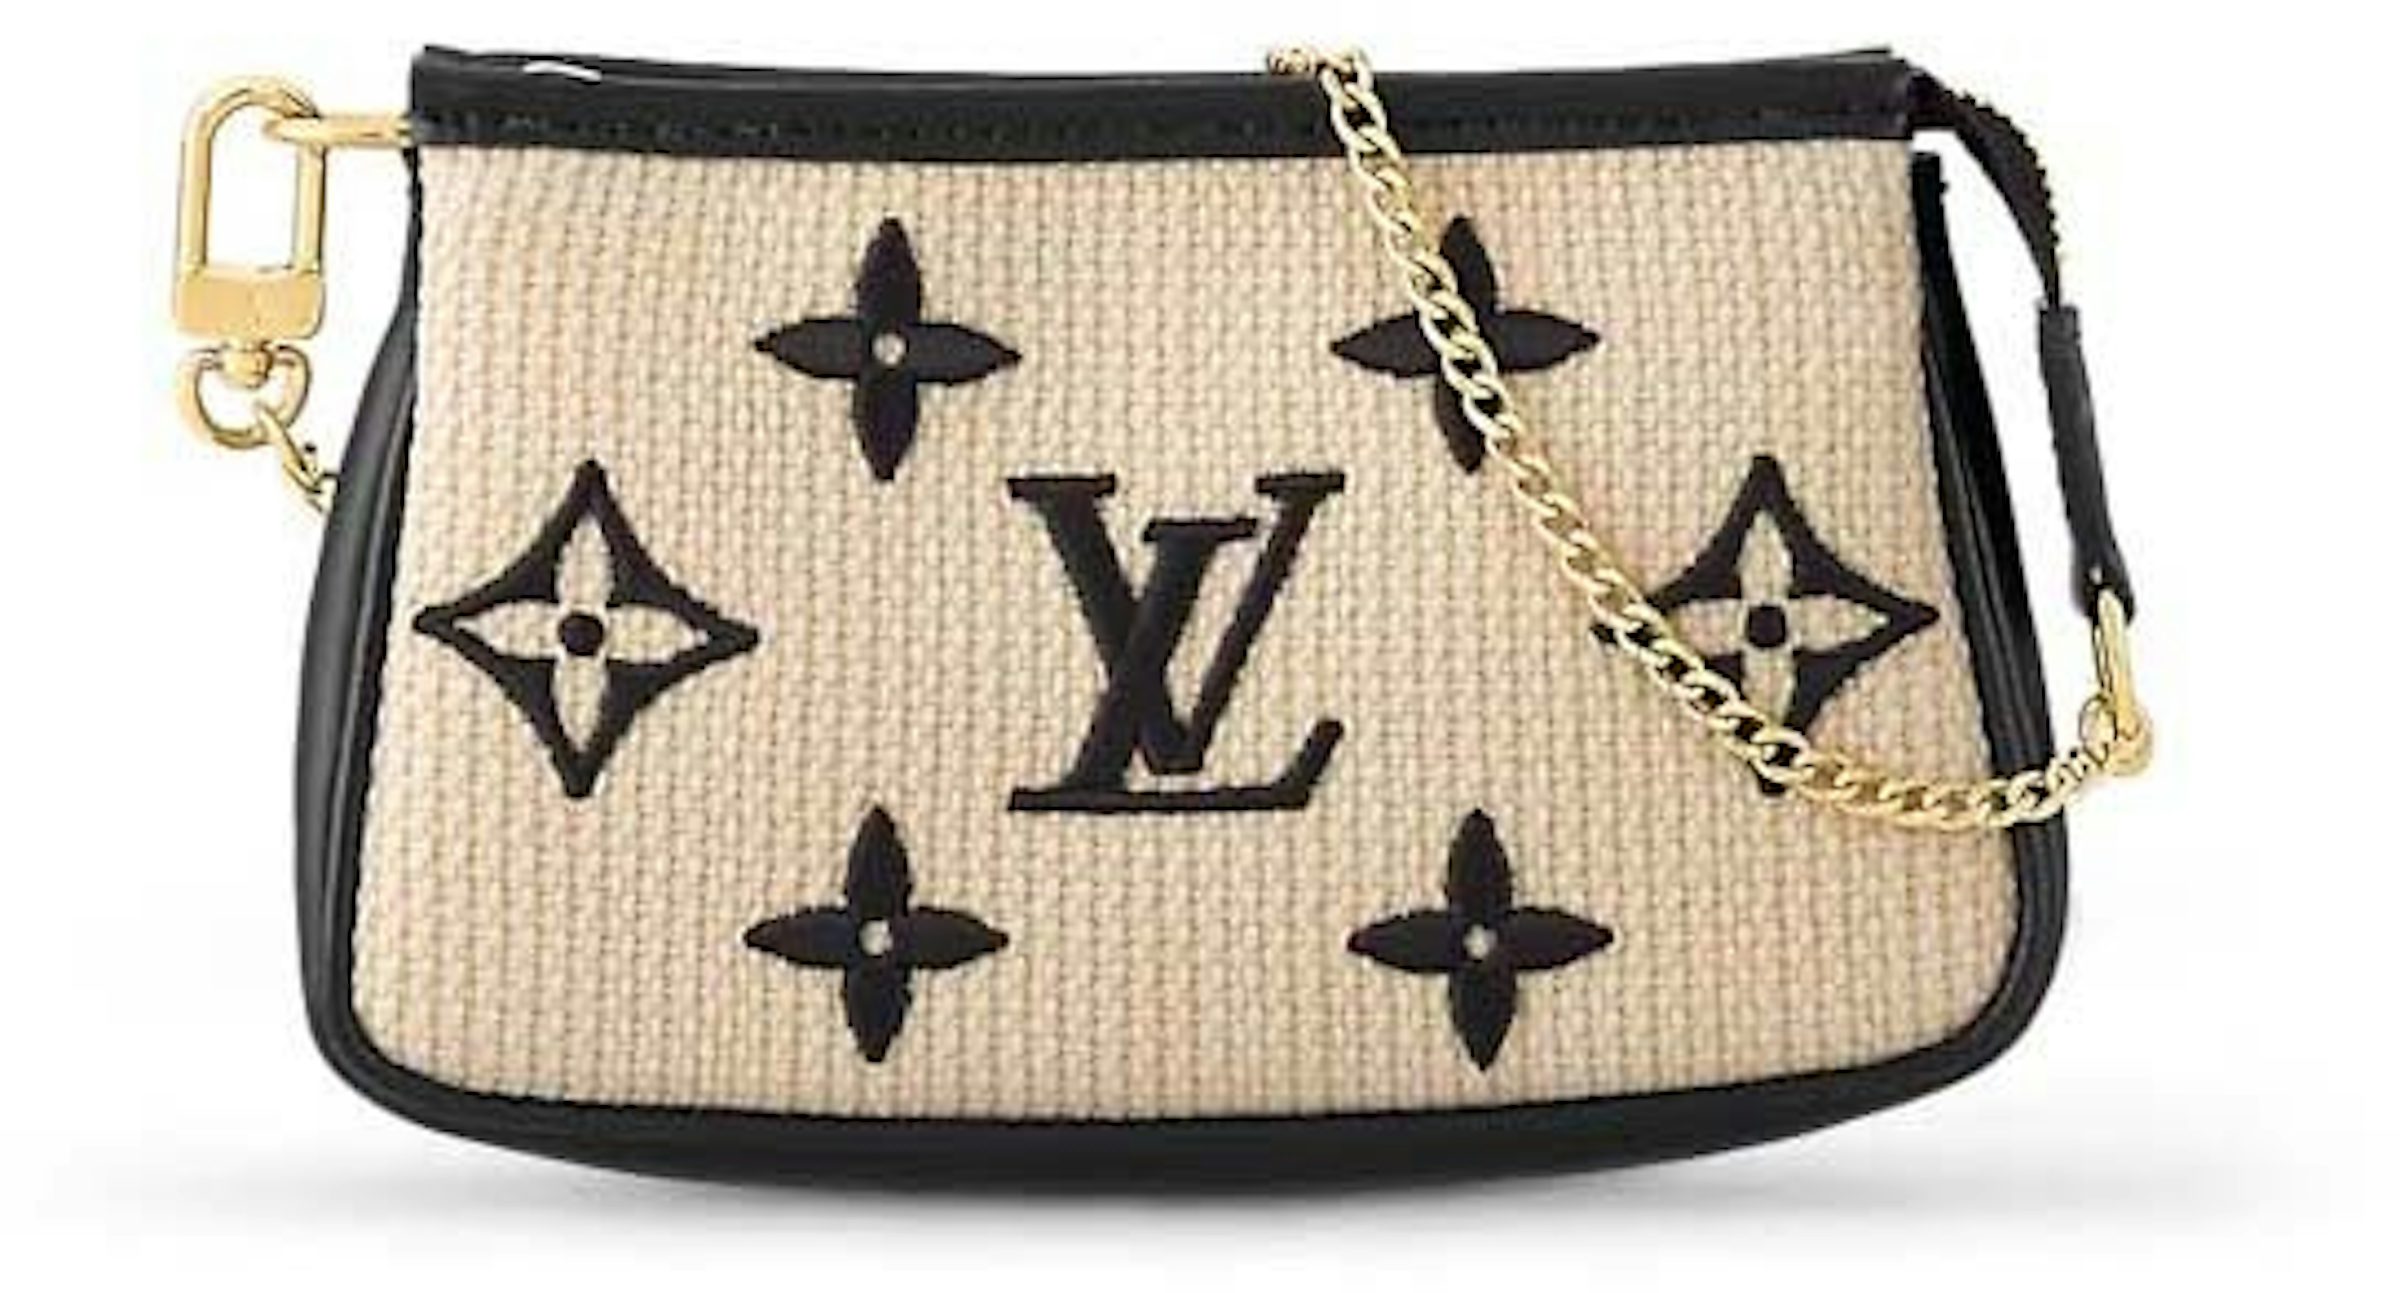 WATCH BEFORE BUYING: Louis Vuitton Mini Pochette Accessoires